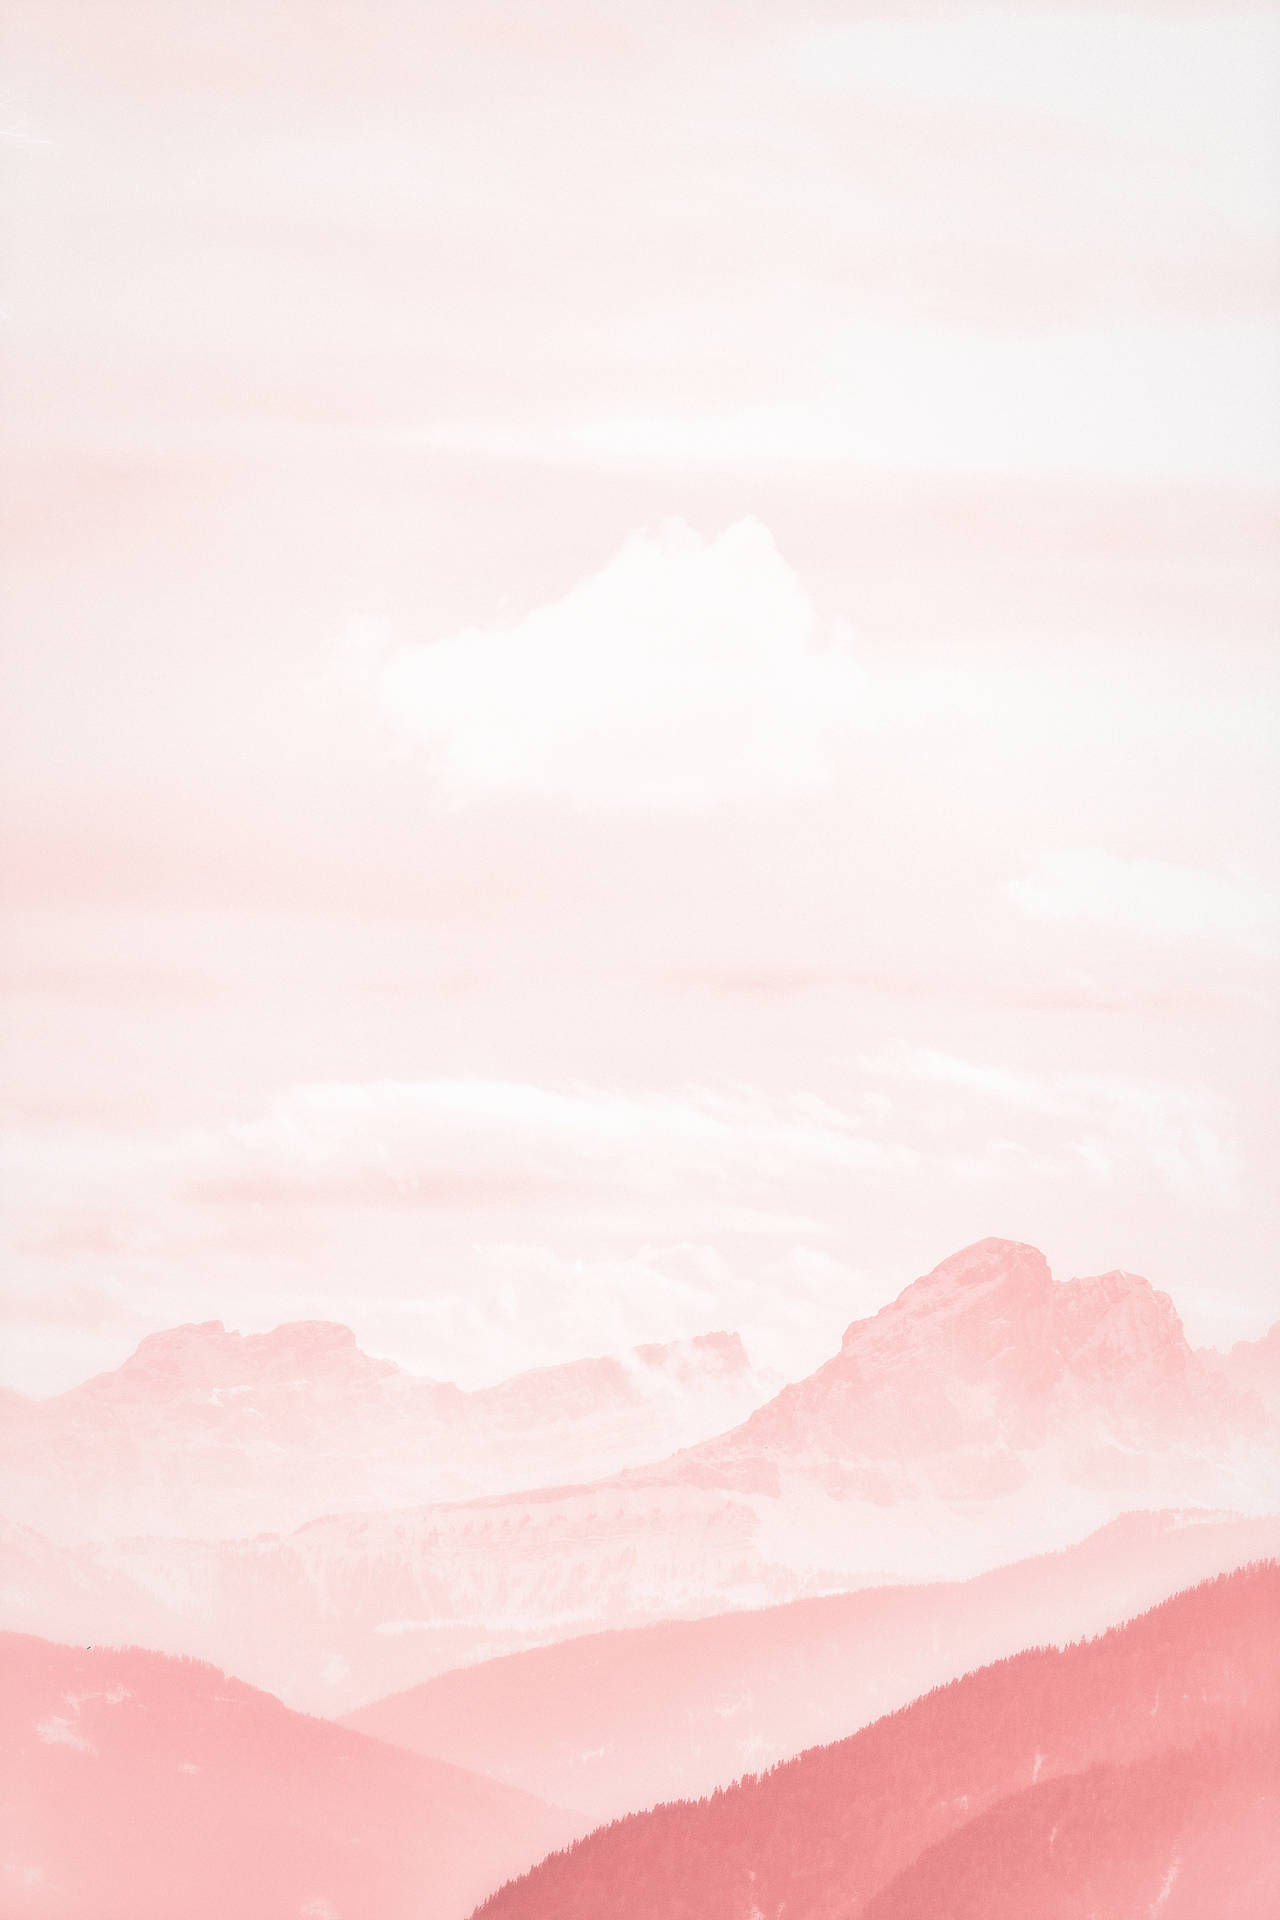 Calm Aesthetic Pink Mountain Wallpaper